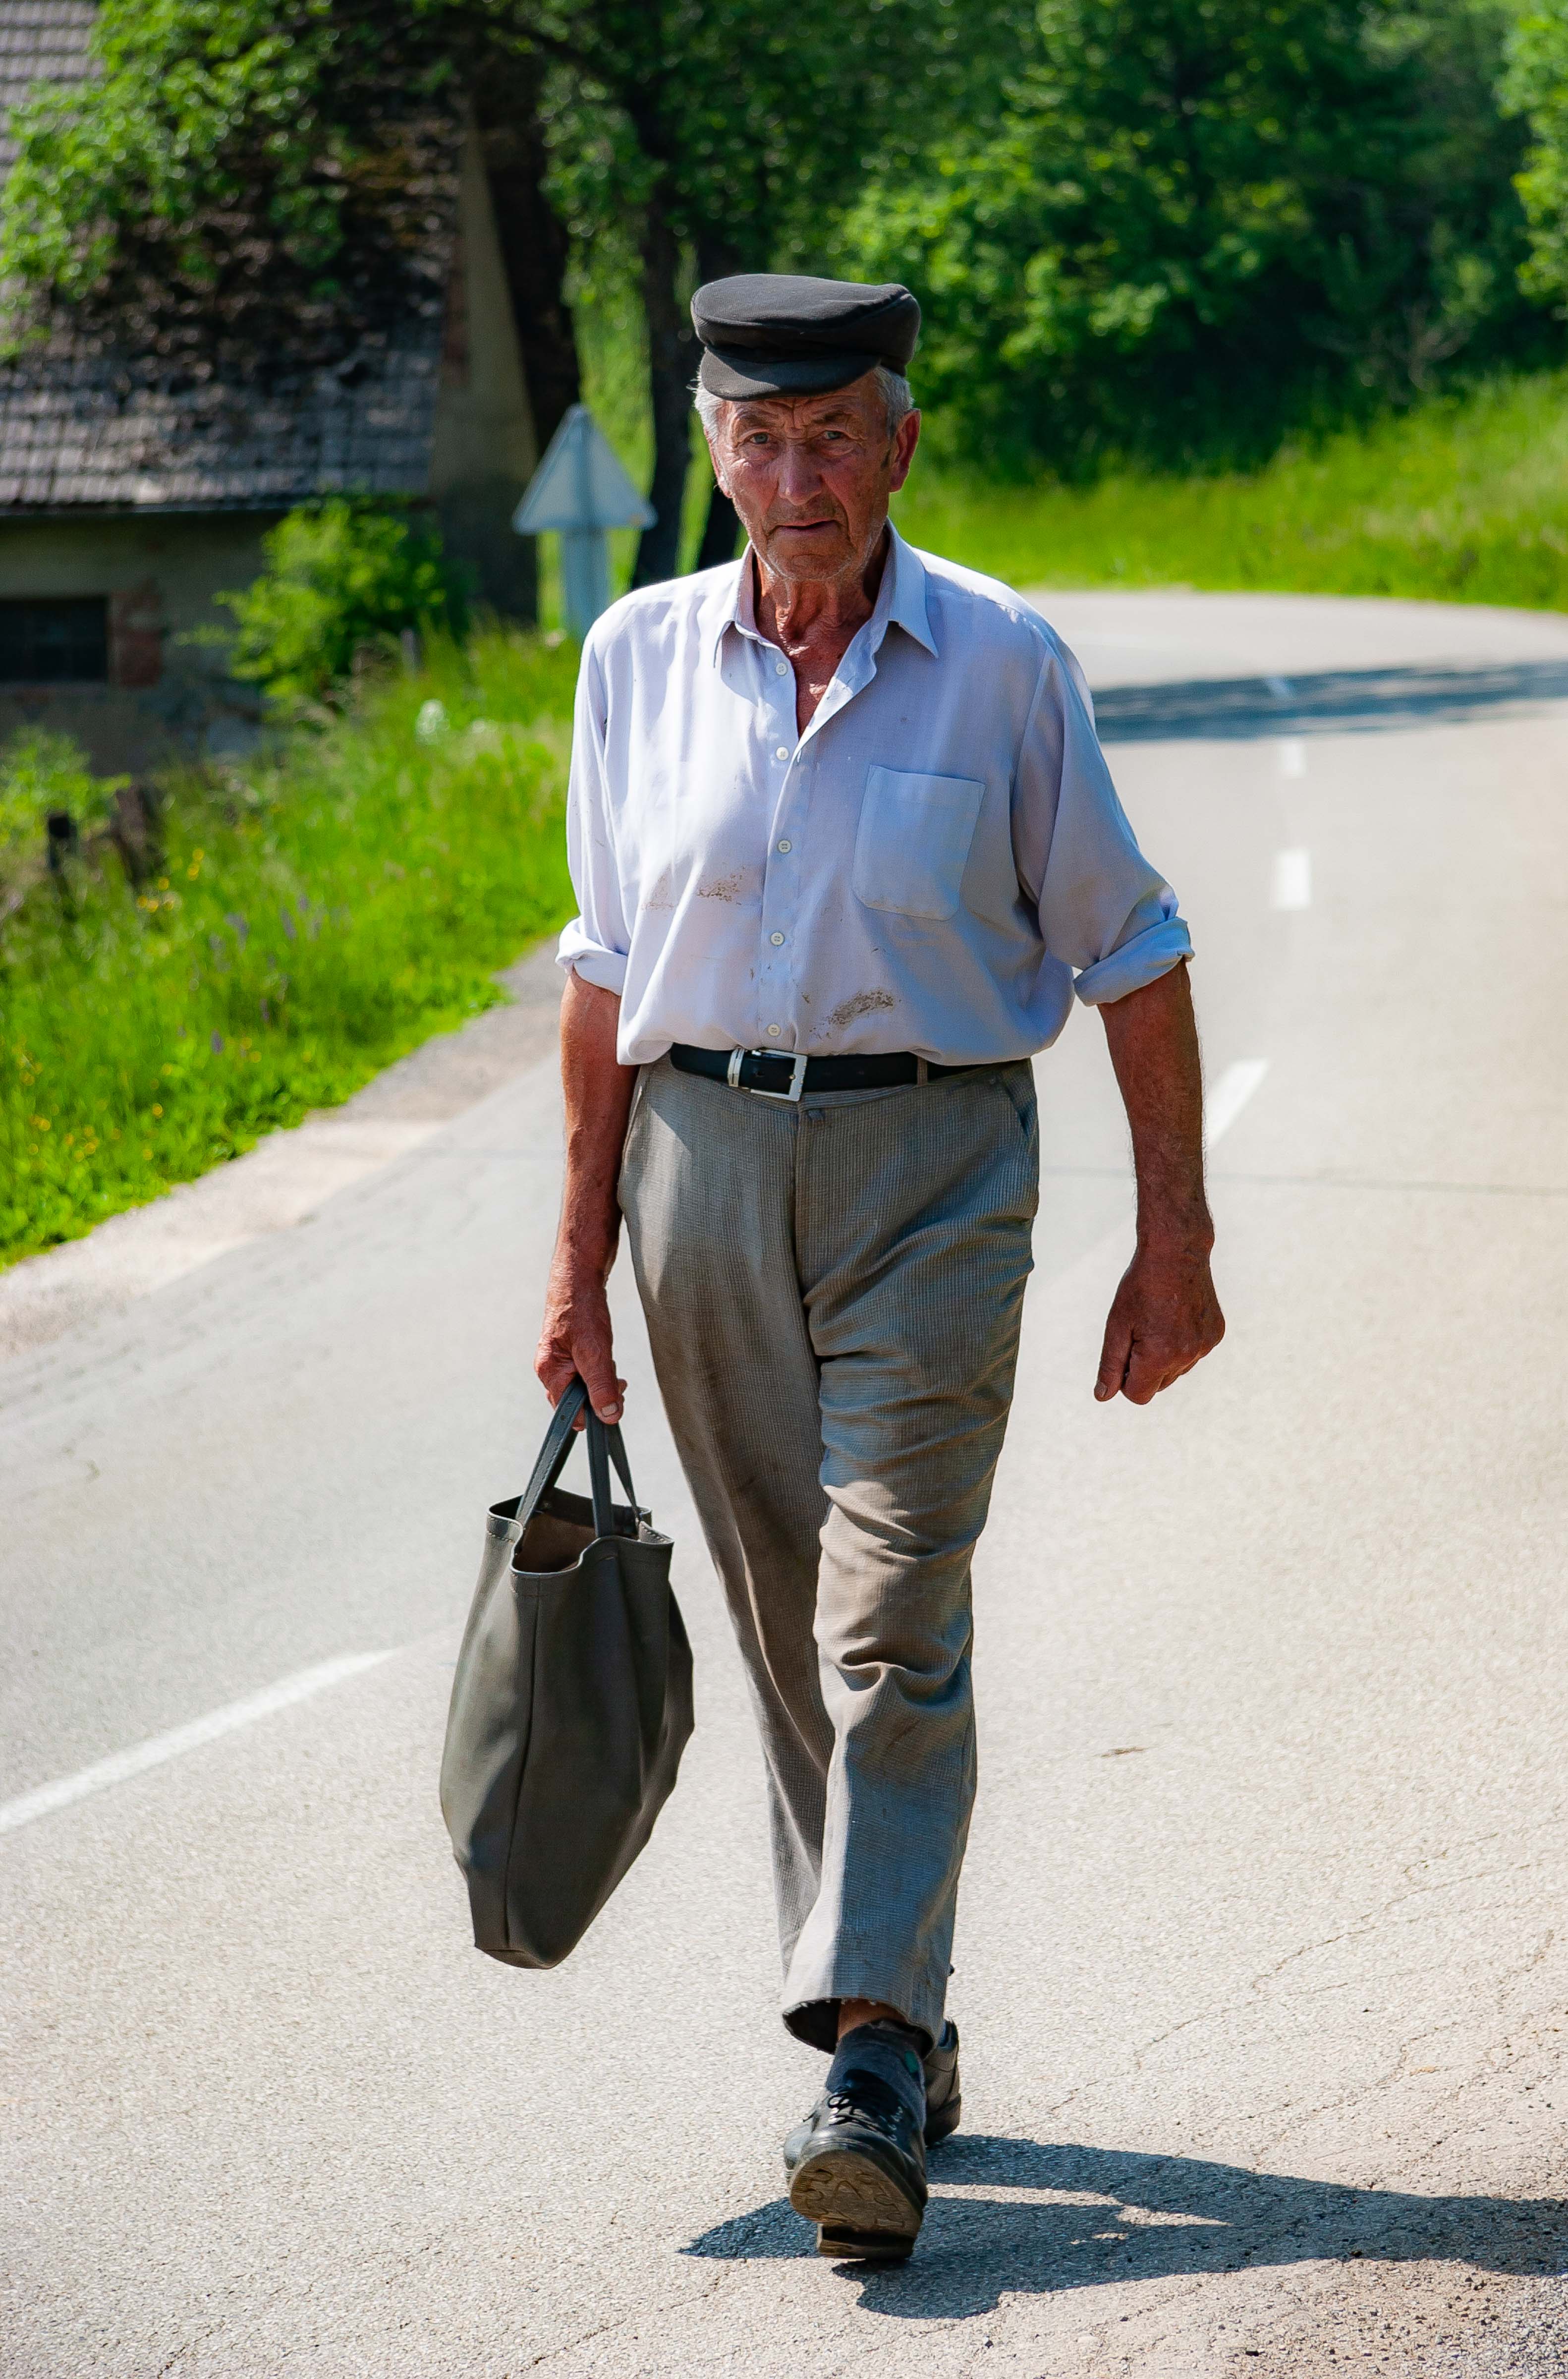 Slovenia, Trebnje Prov, Walking Man, 2006, IMG 7550